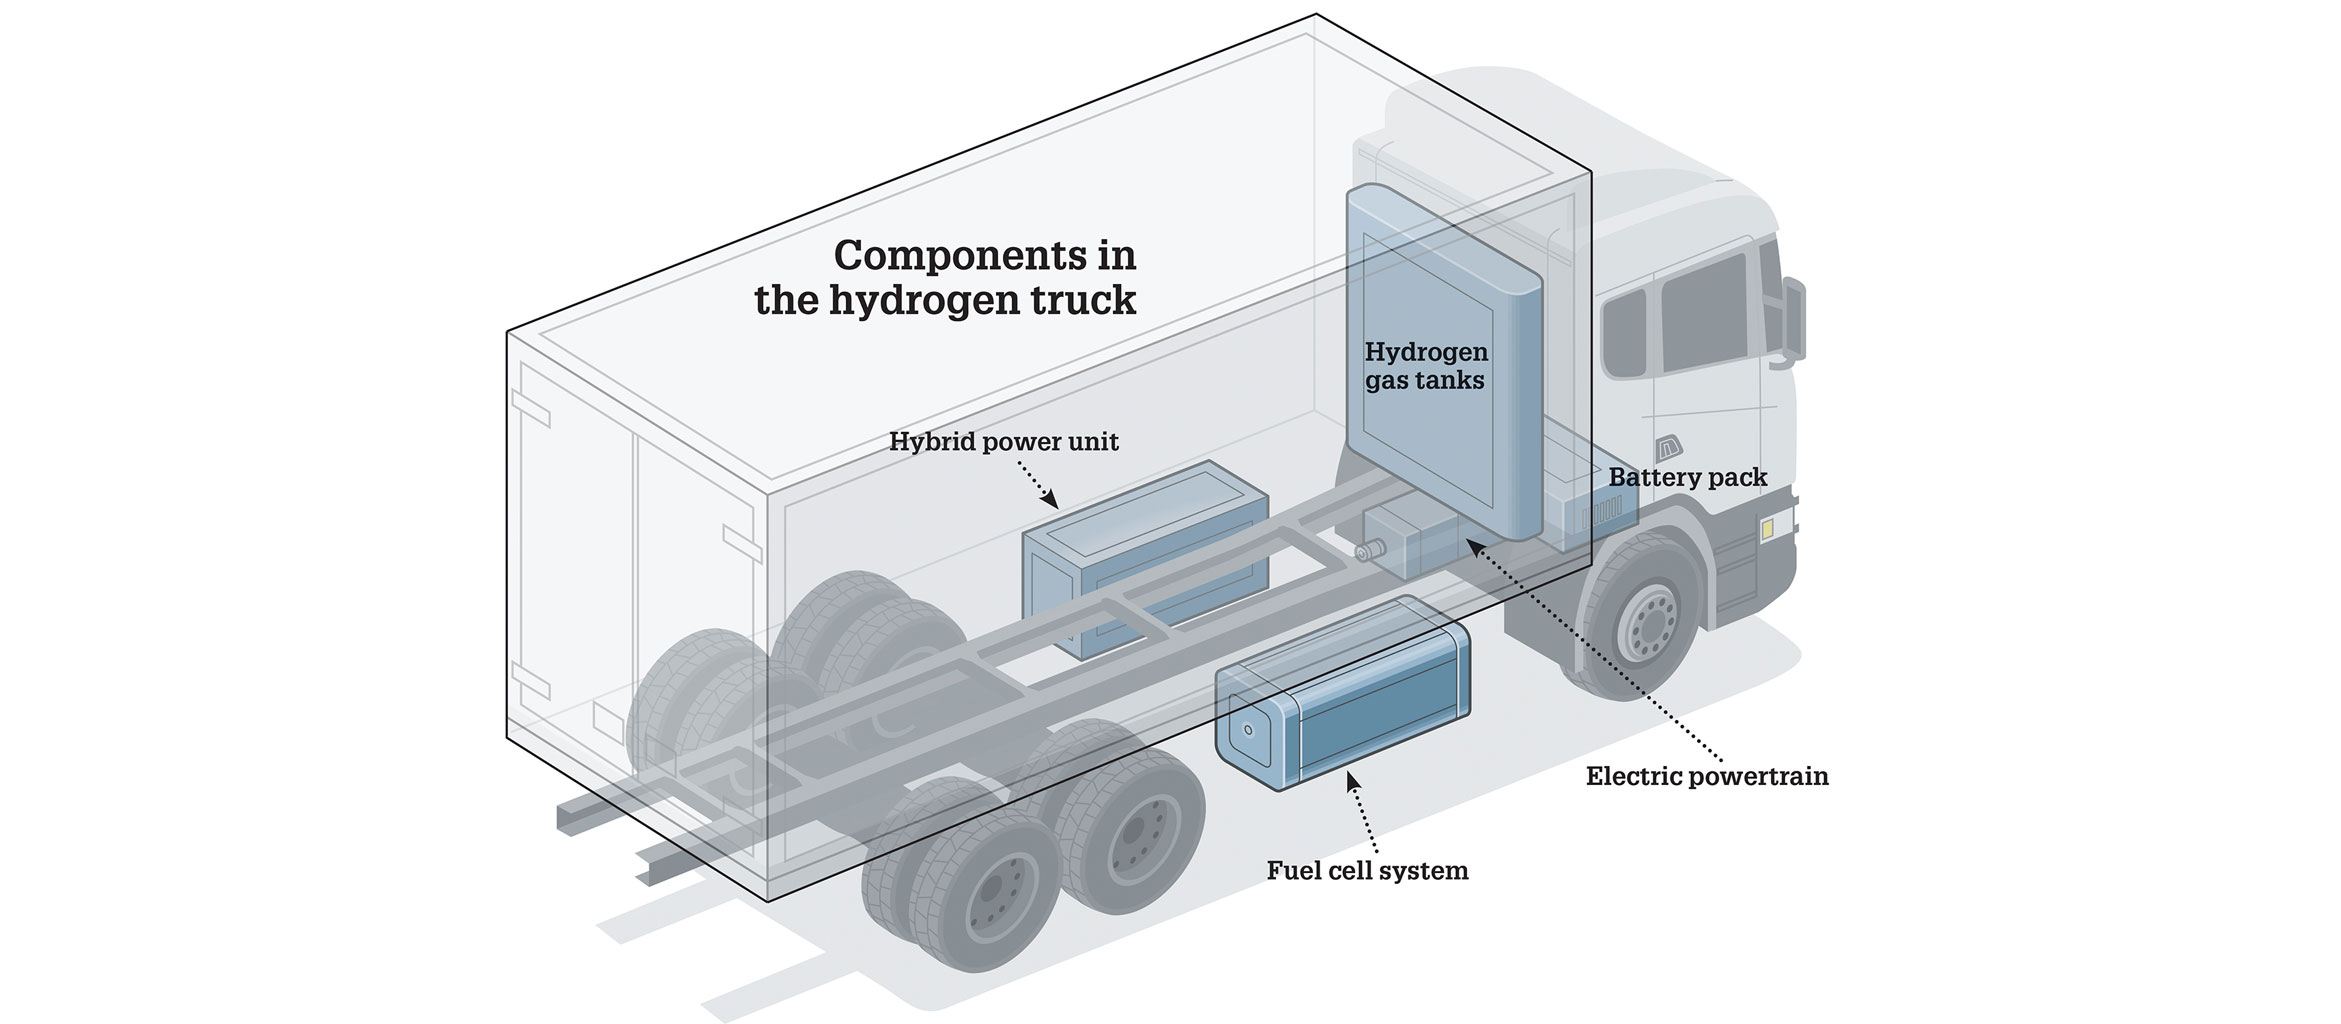 Scania investiga el futuro del hidrógeno